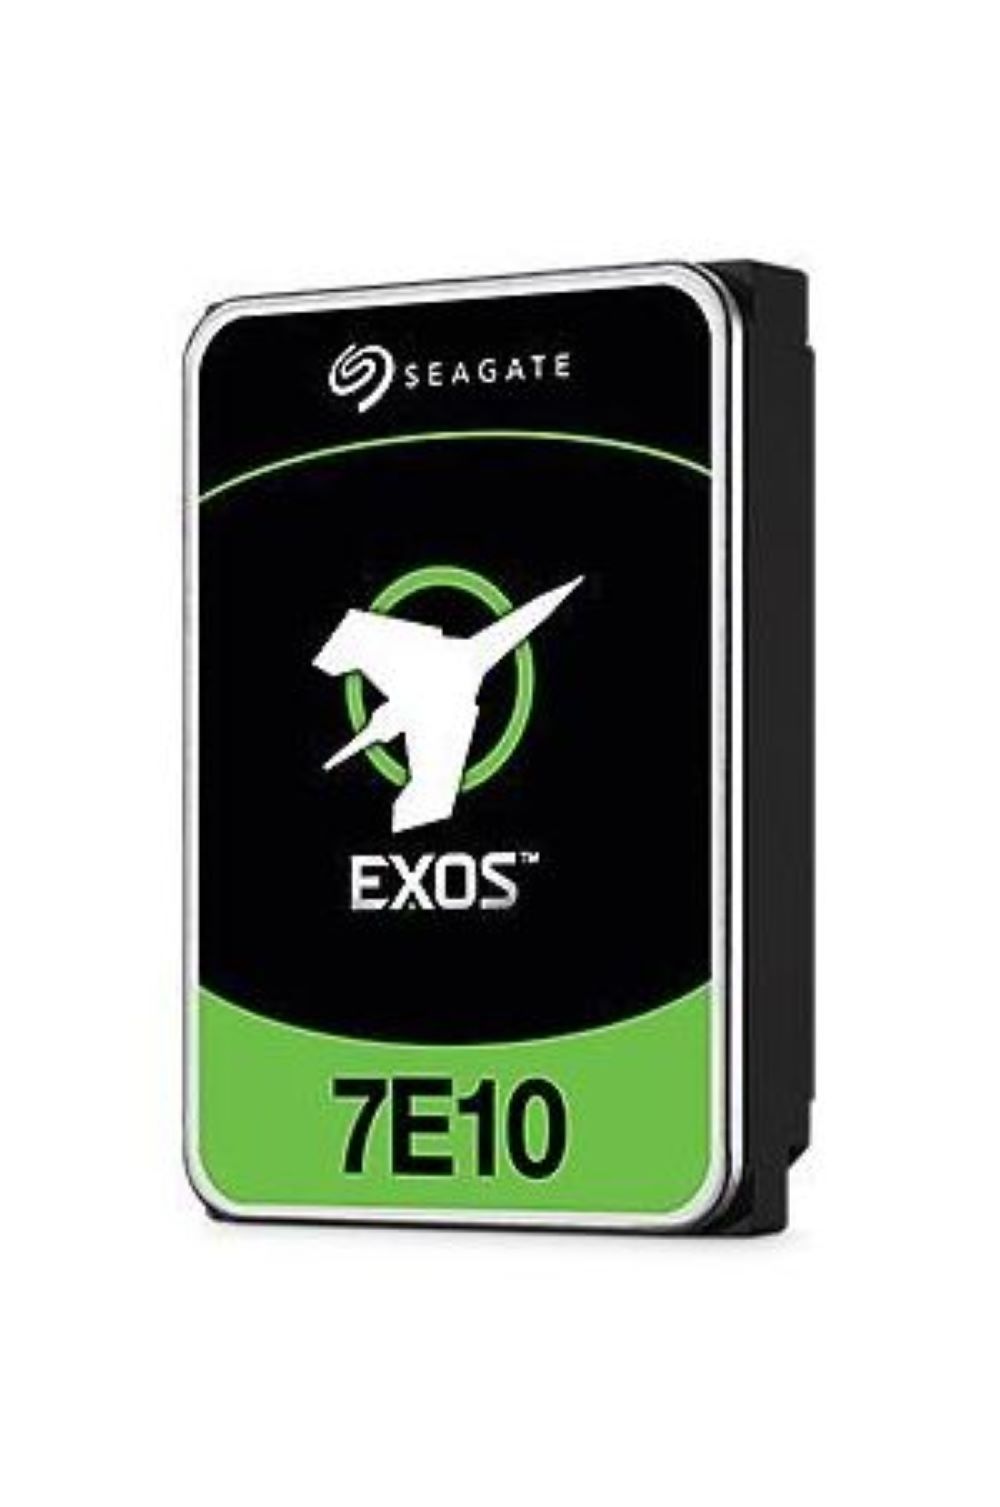 Жесткий диск HDD Seagate Exos 7E10 SAS 2TB (ST2000NM001B) жесткий диск 18tb sas 12gb s seagate st18000nm004j 3 5 exos x18 7200rpm 256mb